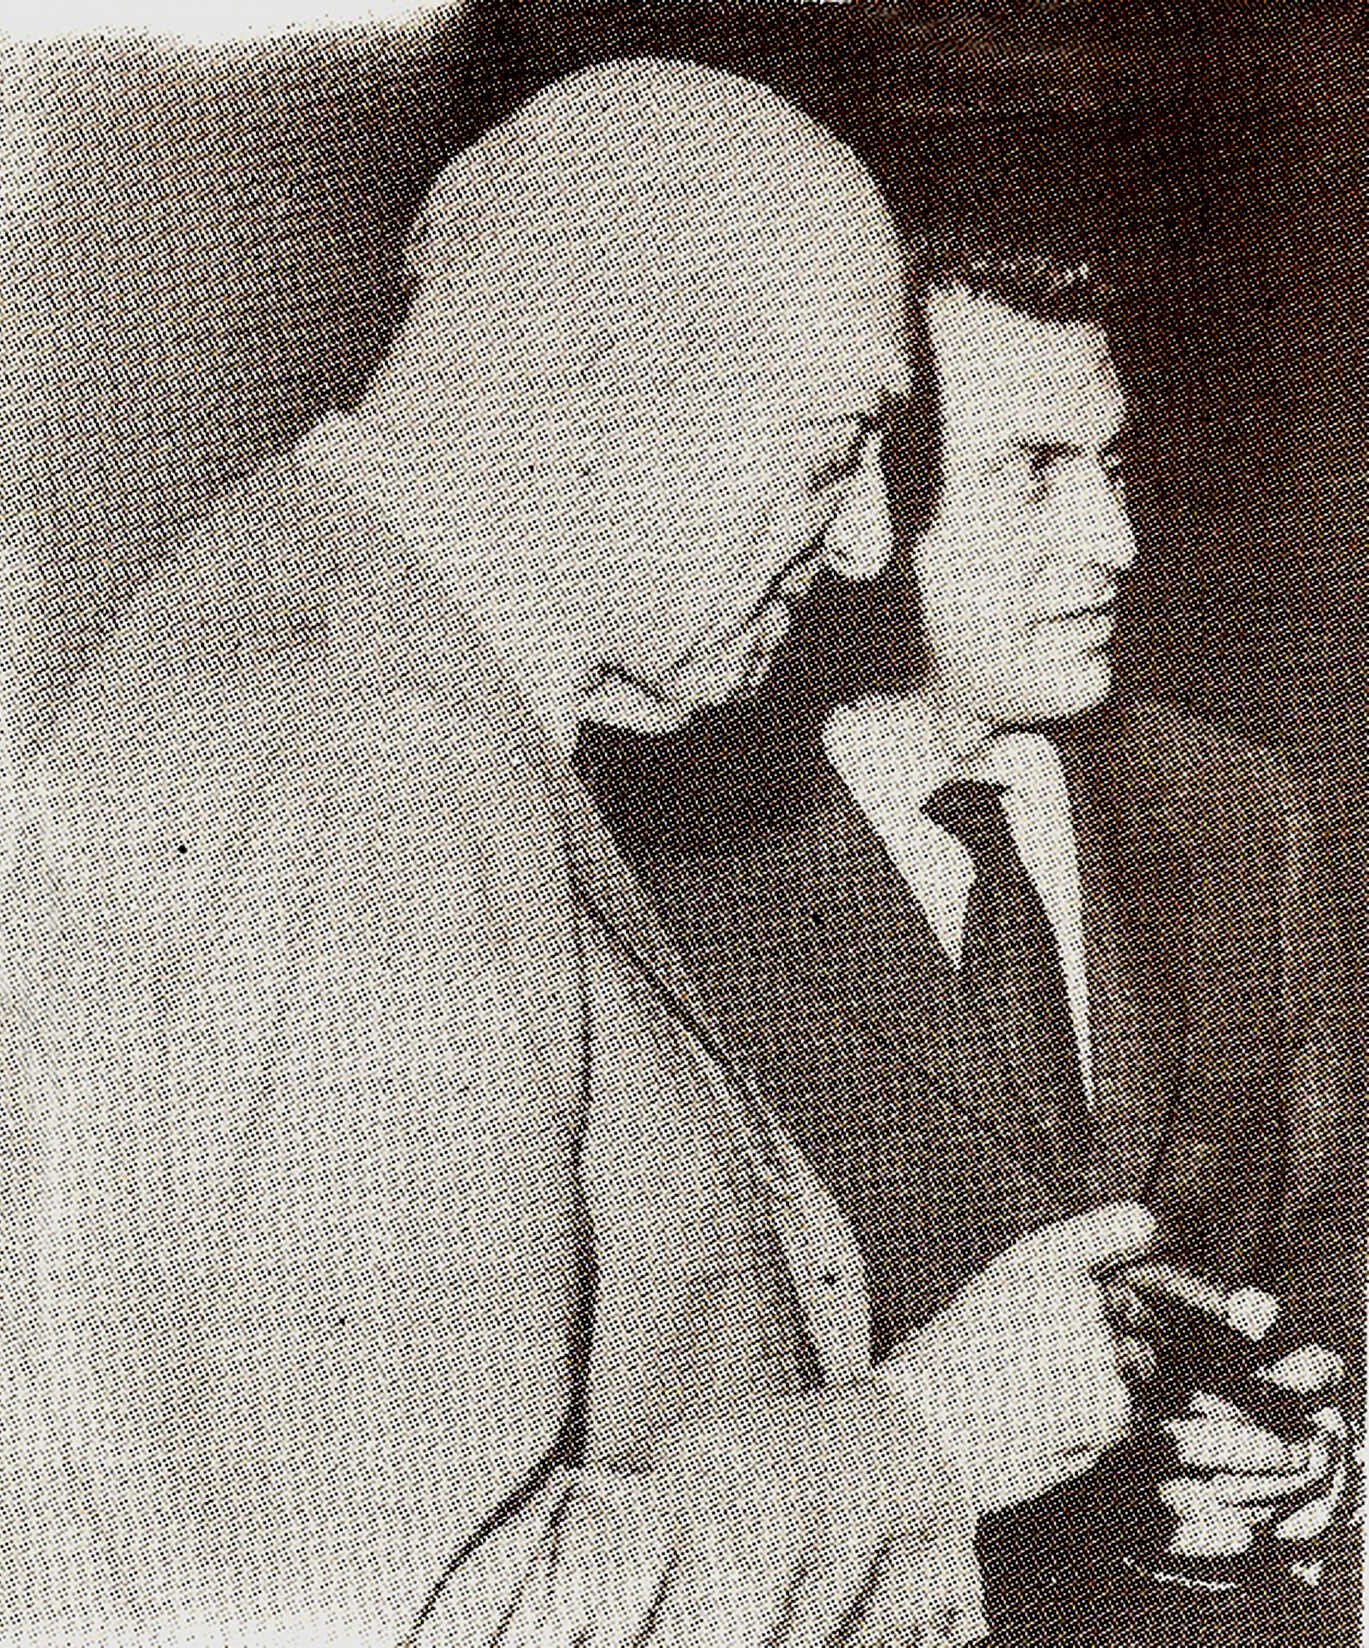 Romero Brest y Gyula Kosice